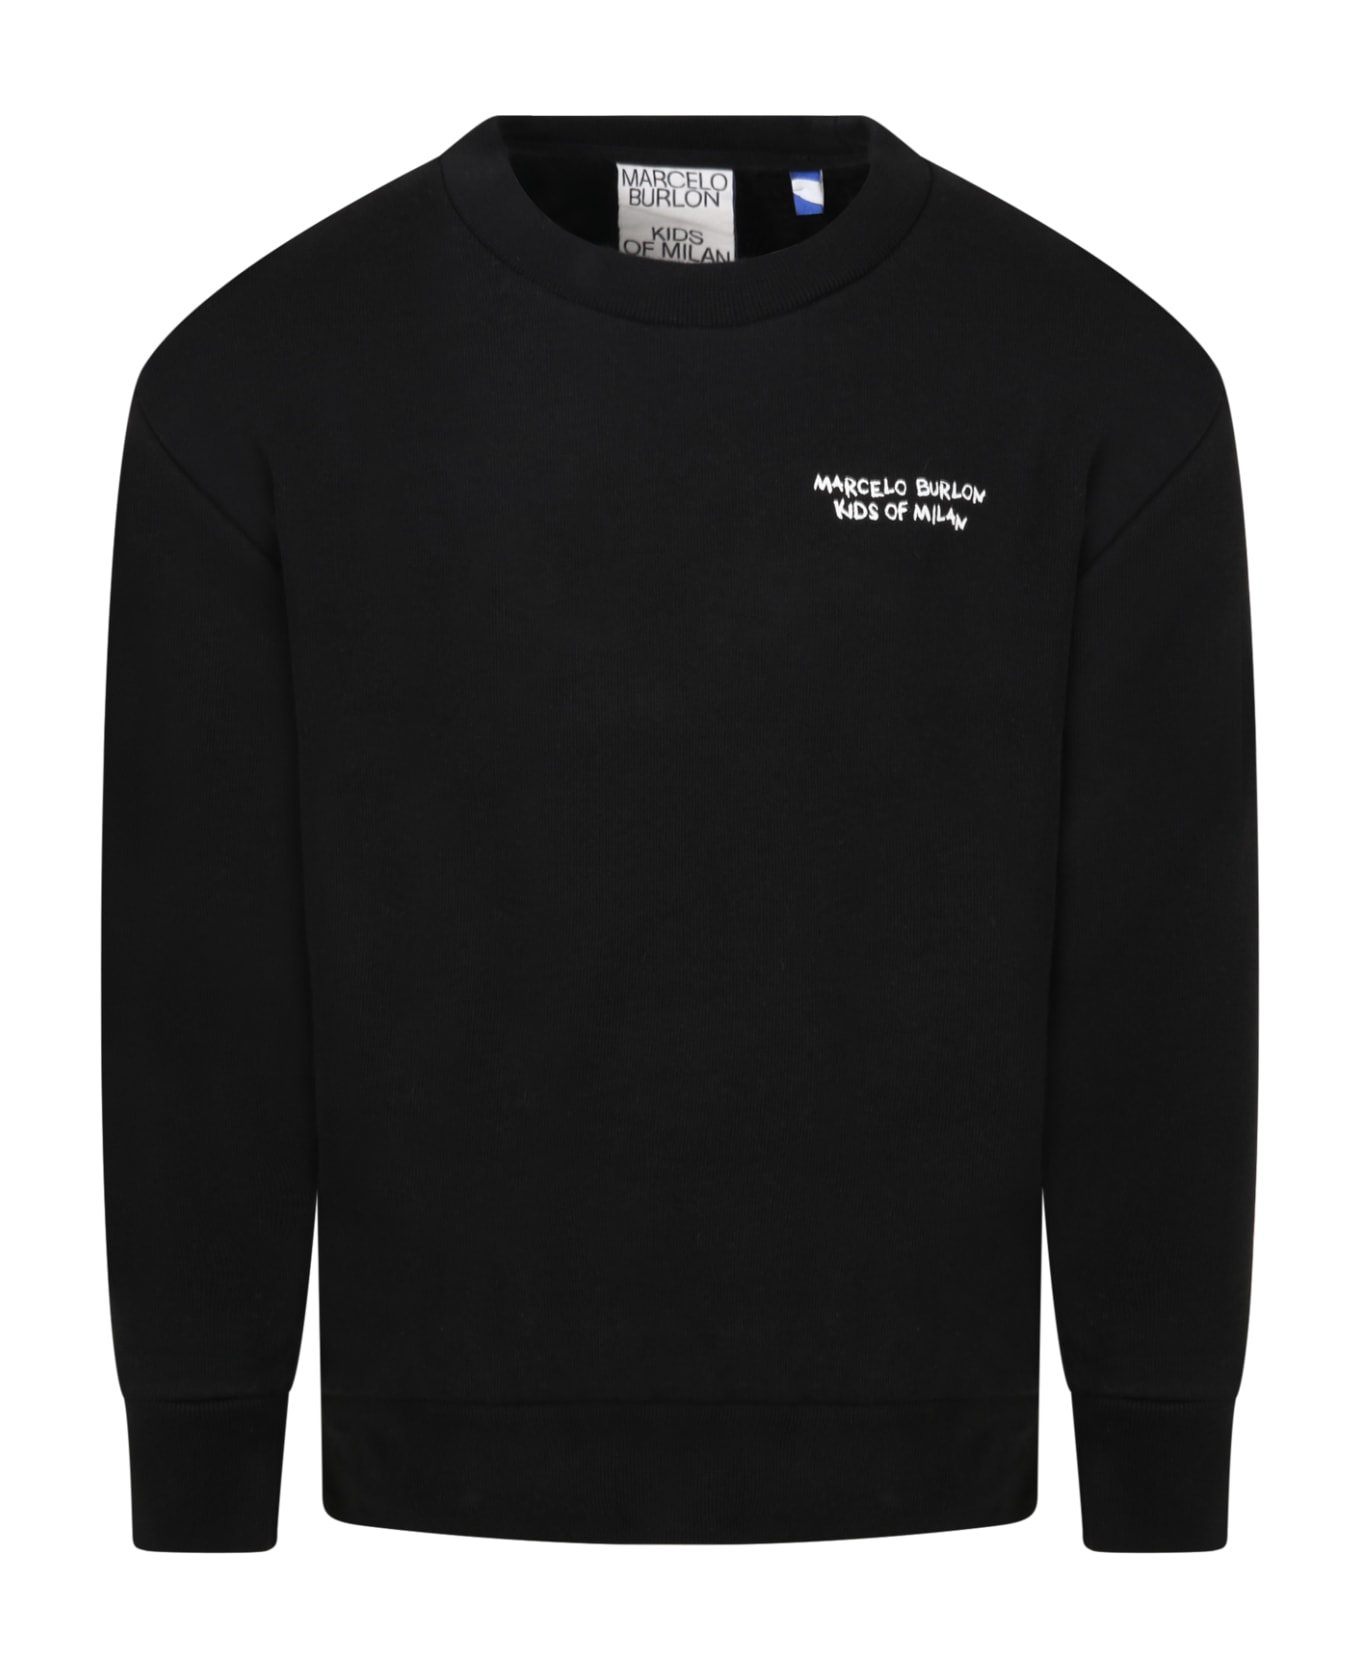 Marcelo Burlon Black Sweatshirt For Kids With White Logo - Black